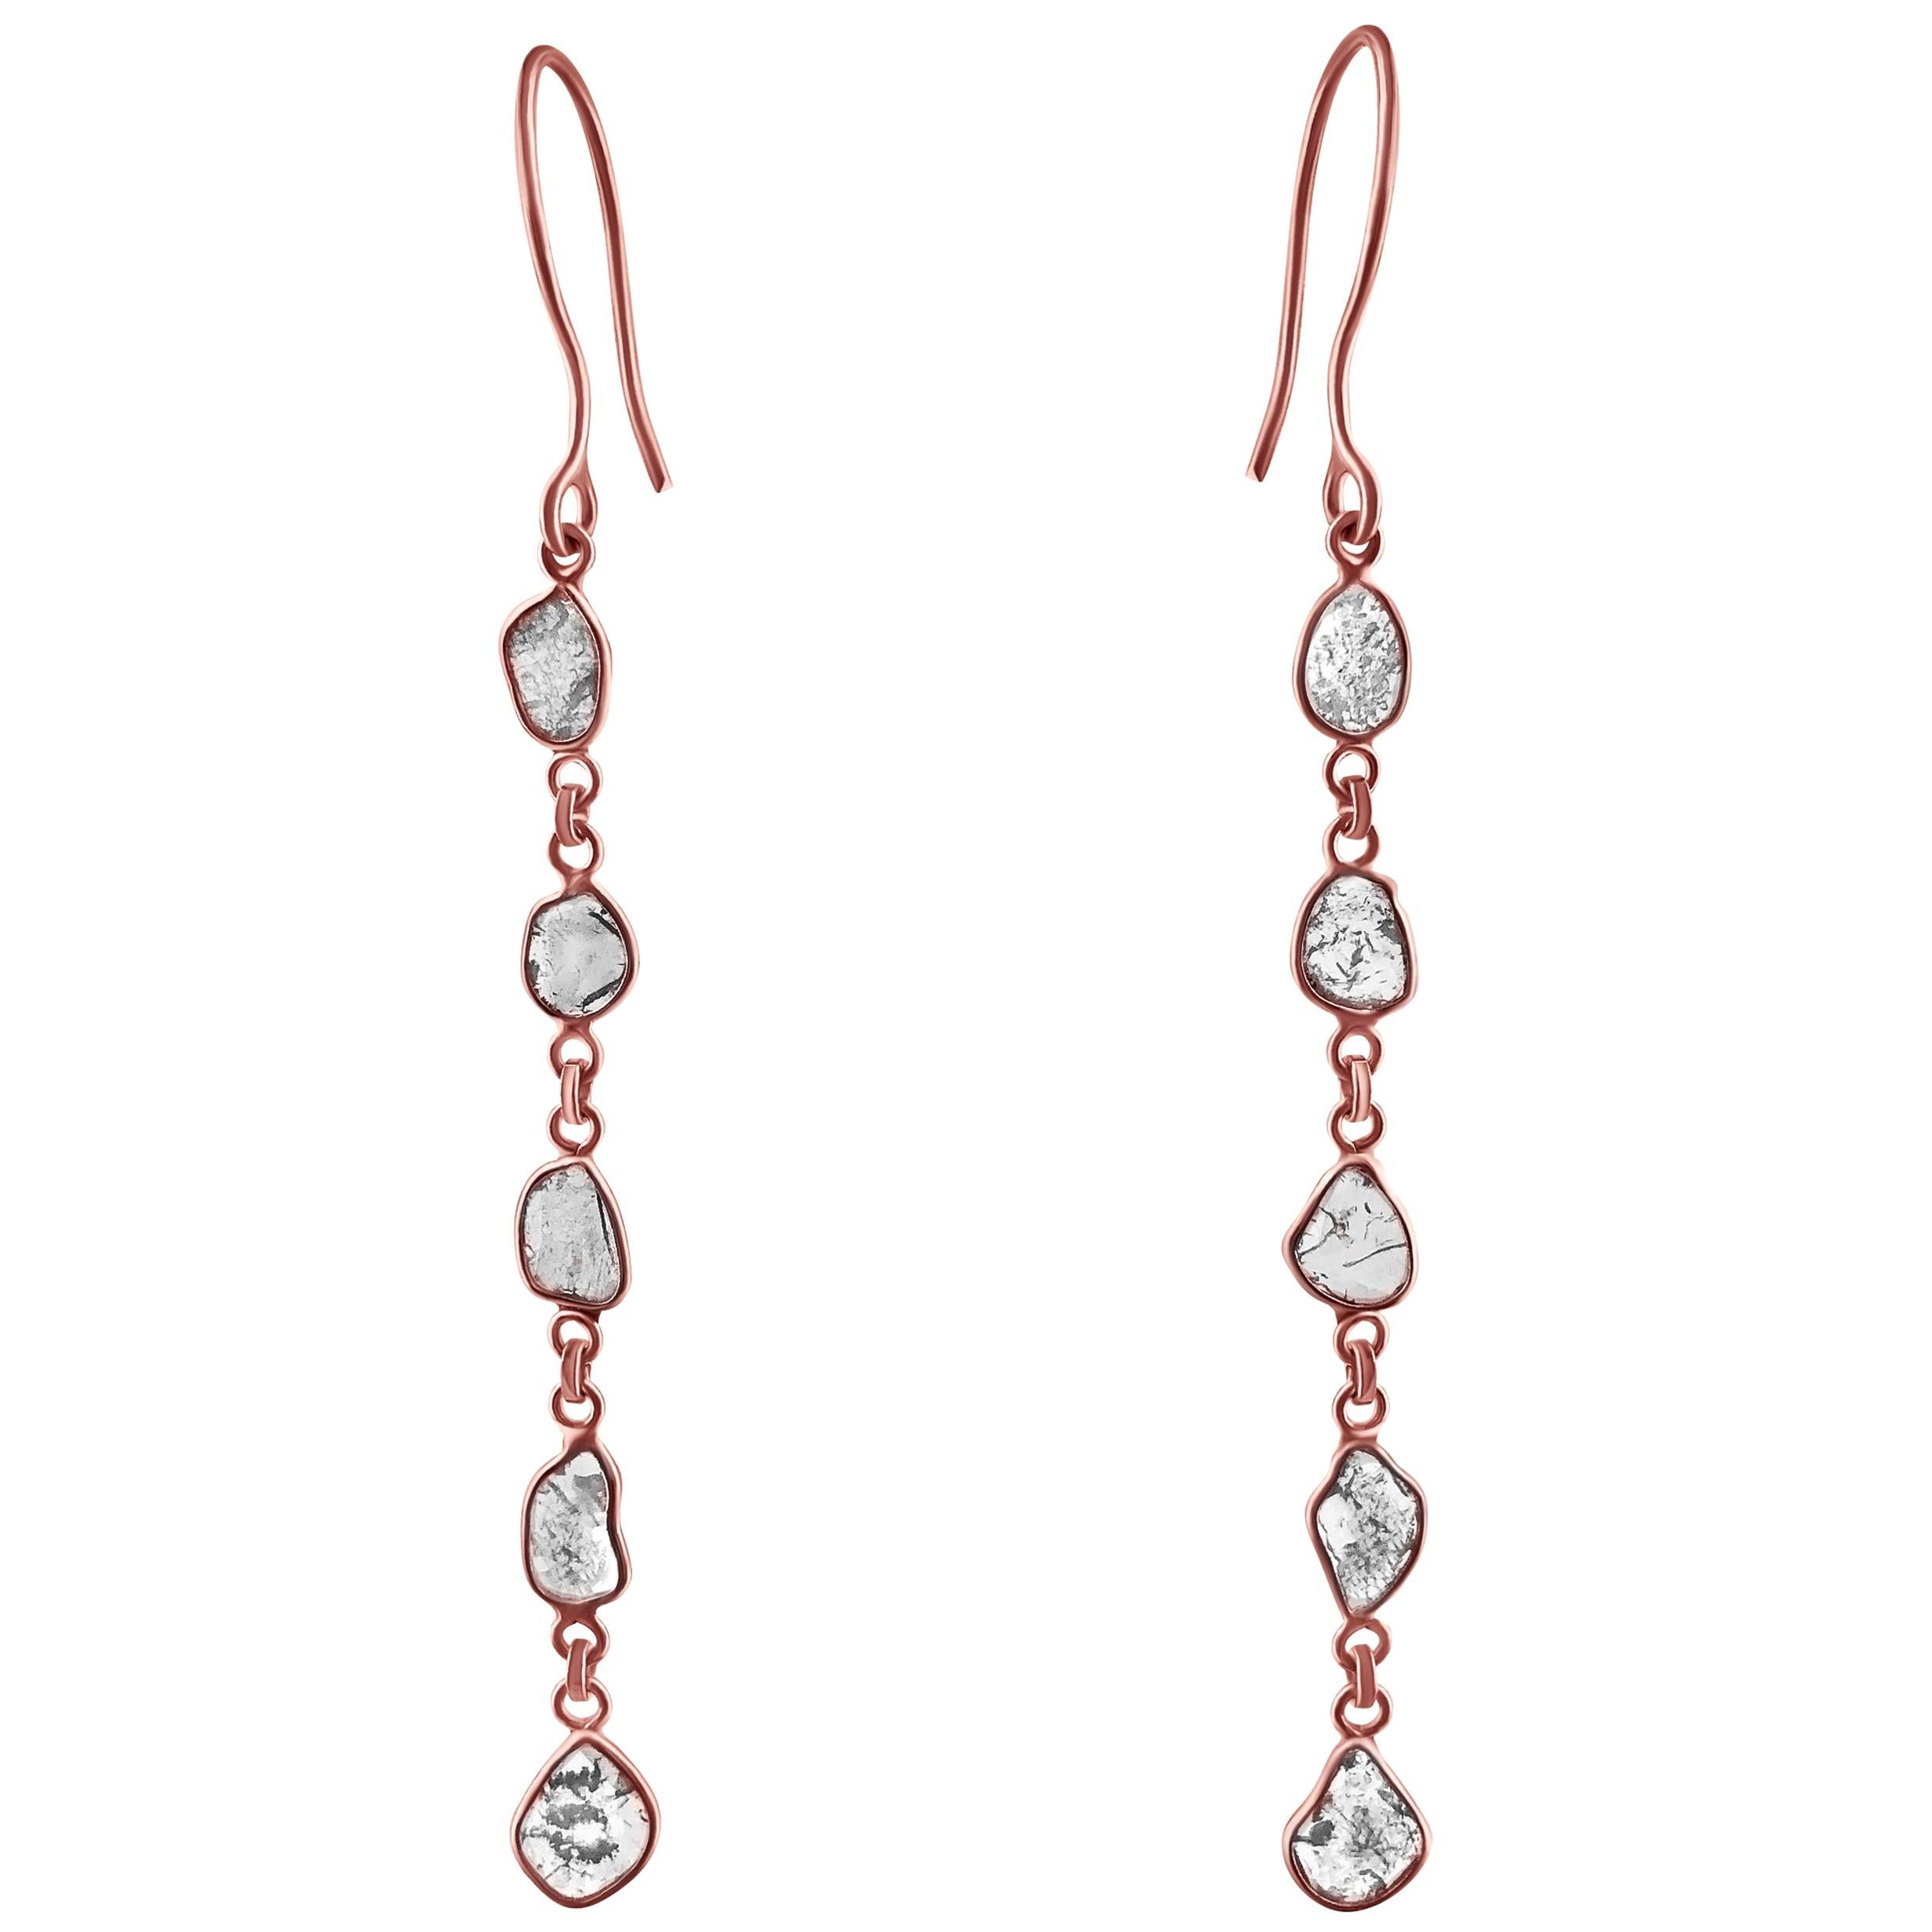 Rock & Divine Dawn Diamond Drop Earrings in 18 Karat Rose Gold F VS2 1.50 Carat